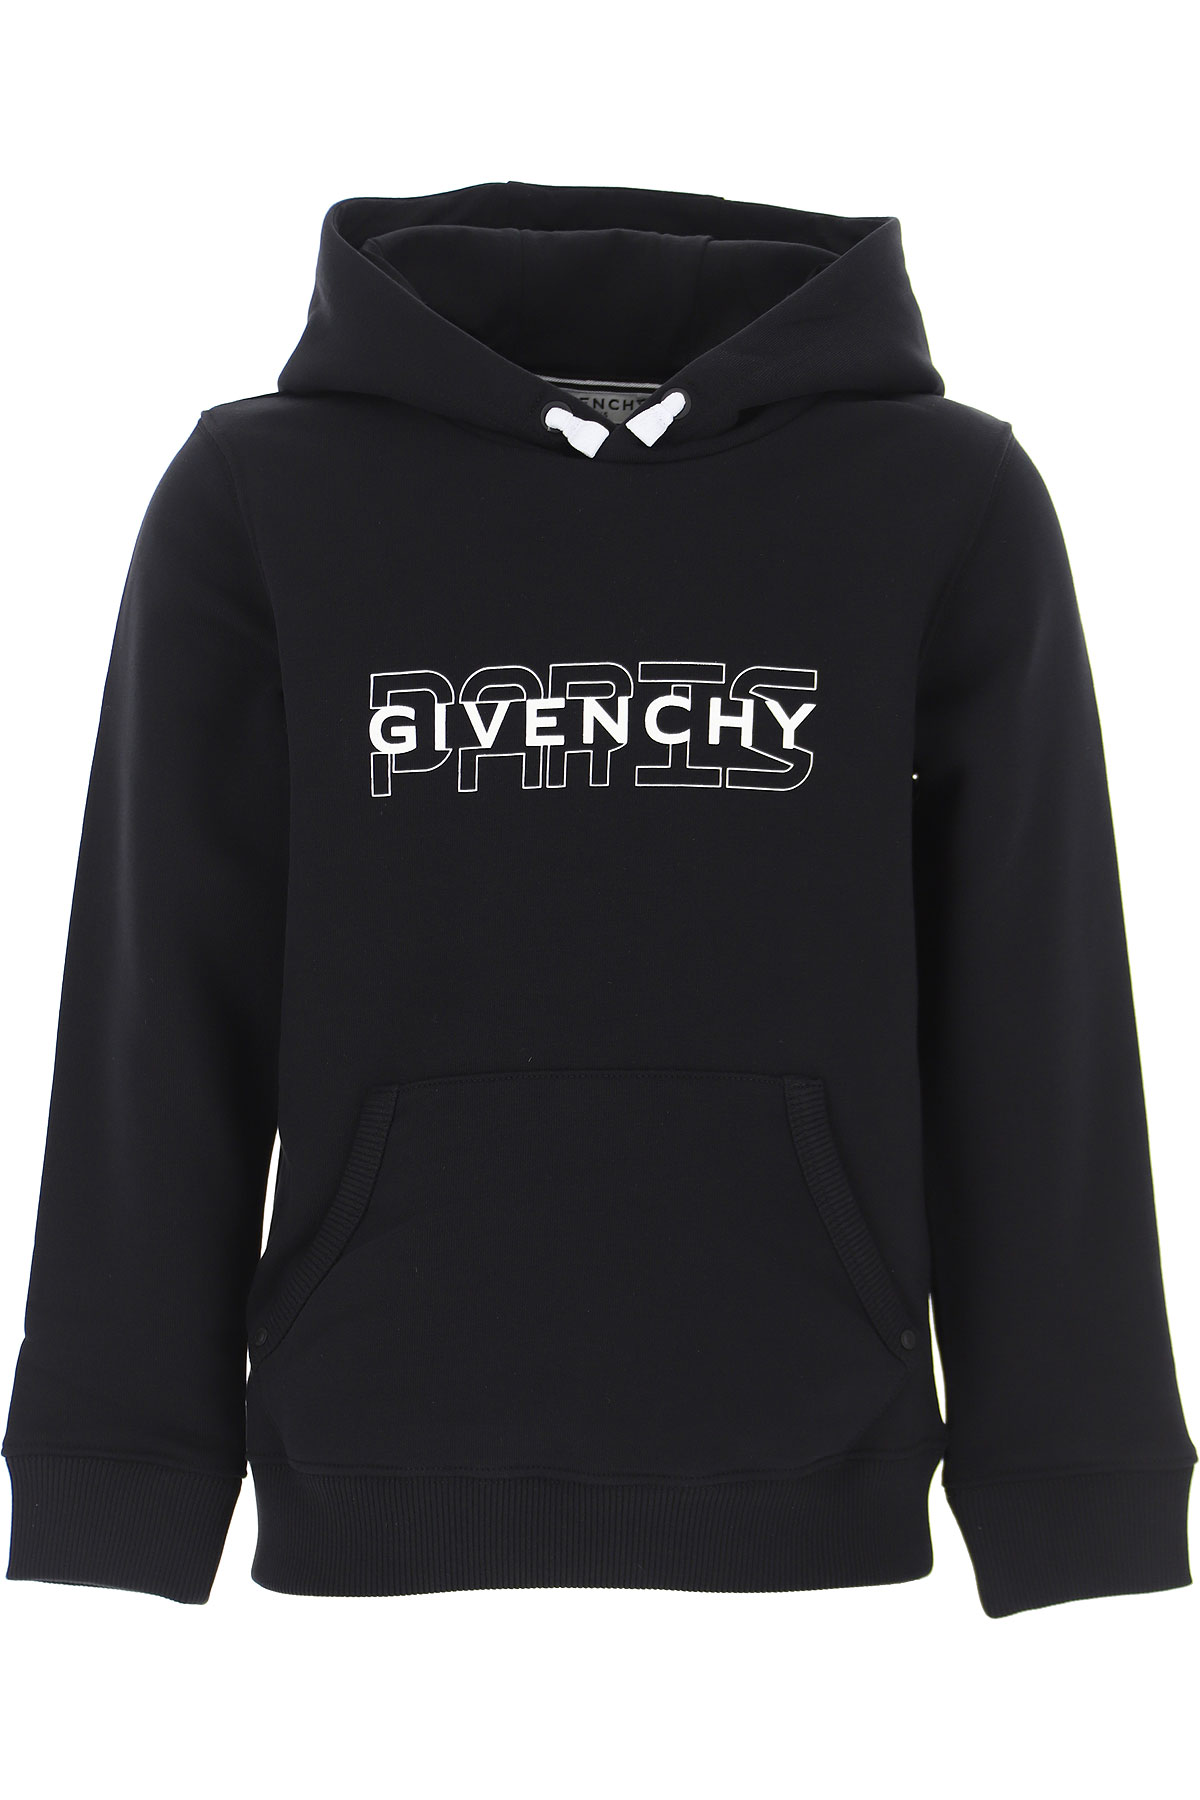 Kidswear Givenchy, Style code: h25-206-09b